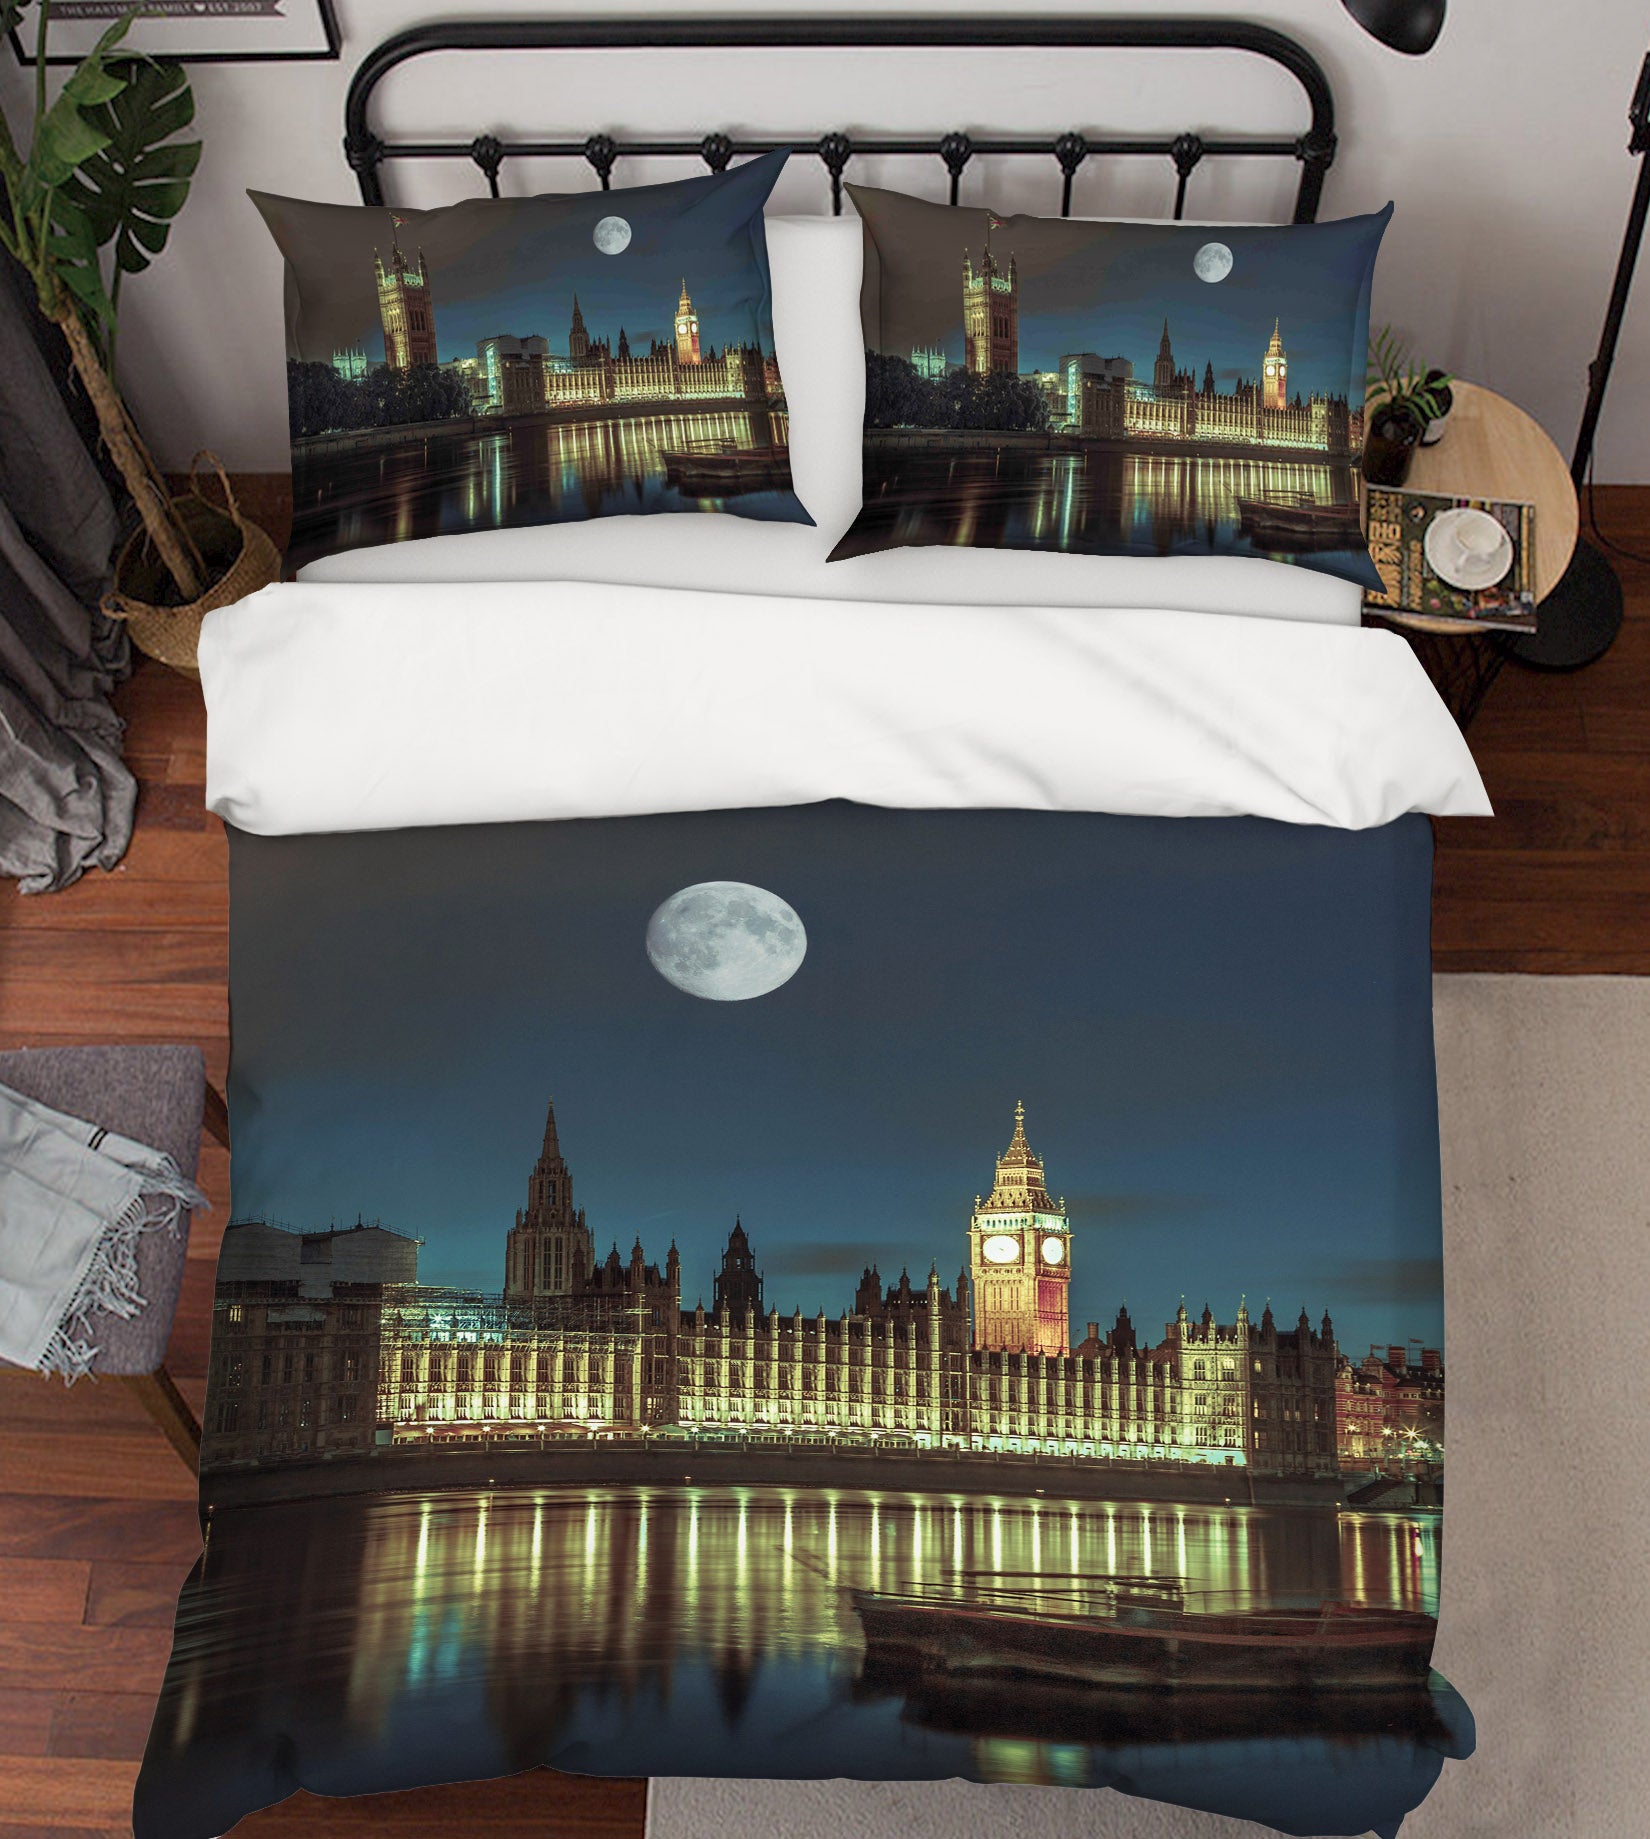 3D Building Night Moon 85109 Assaf Frank Bedding Bed Pillowcases Quilt